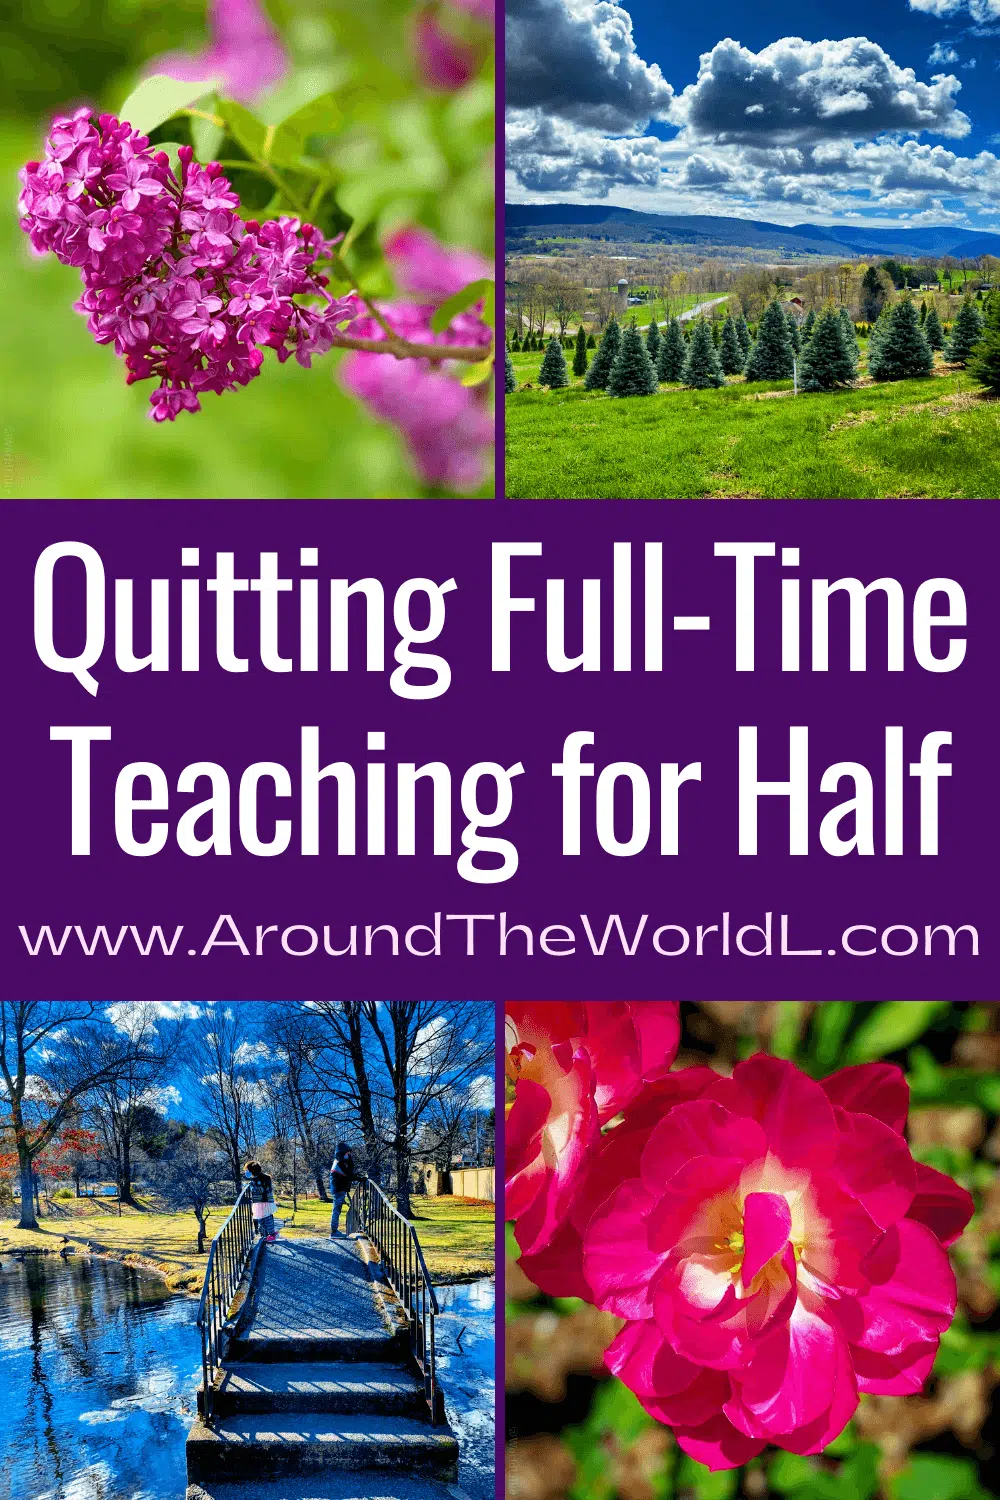 Quitting full-time teaching